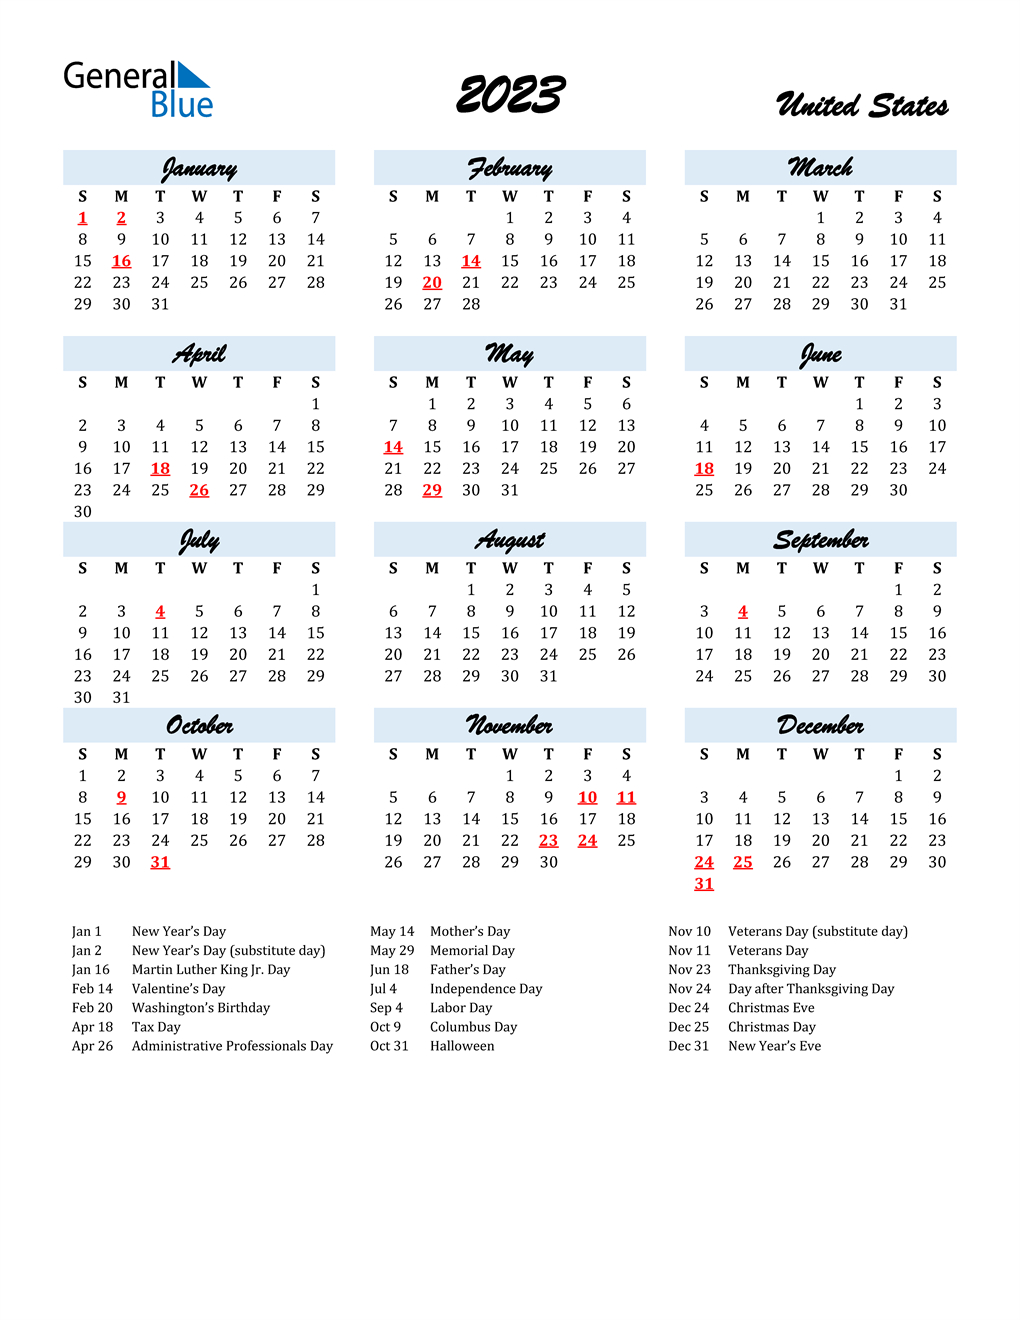 Baylor University 2022-2023 Calendar Holidays - Holiday